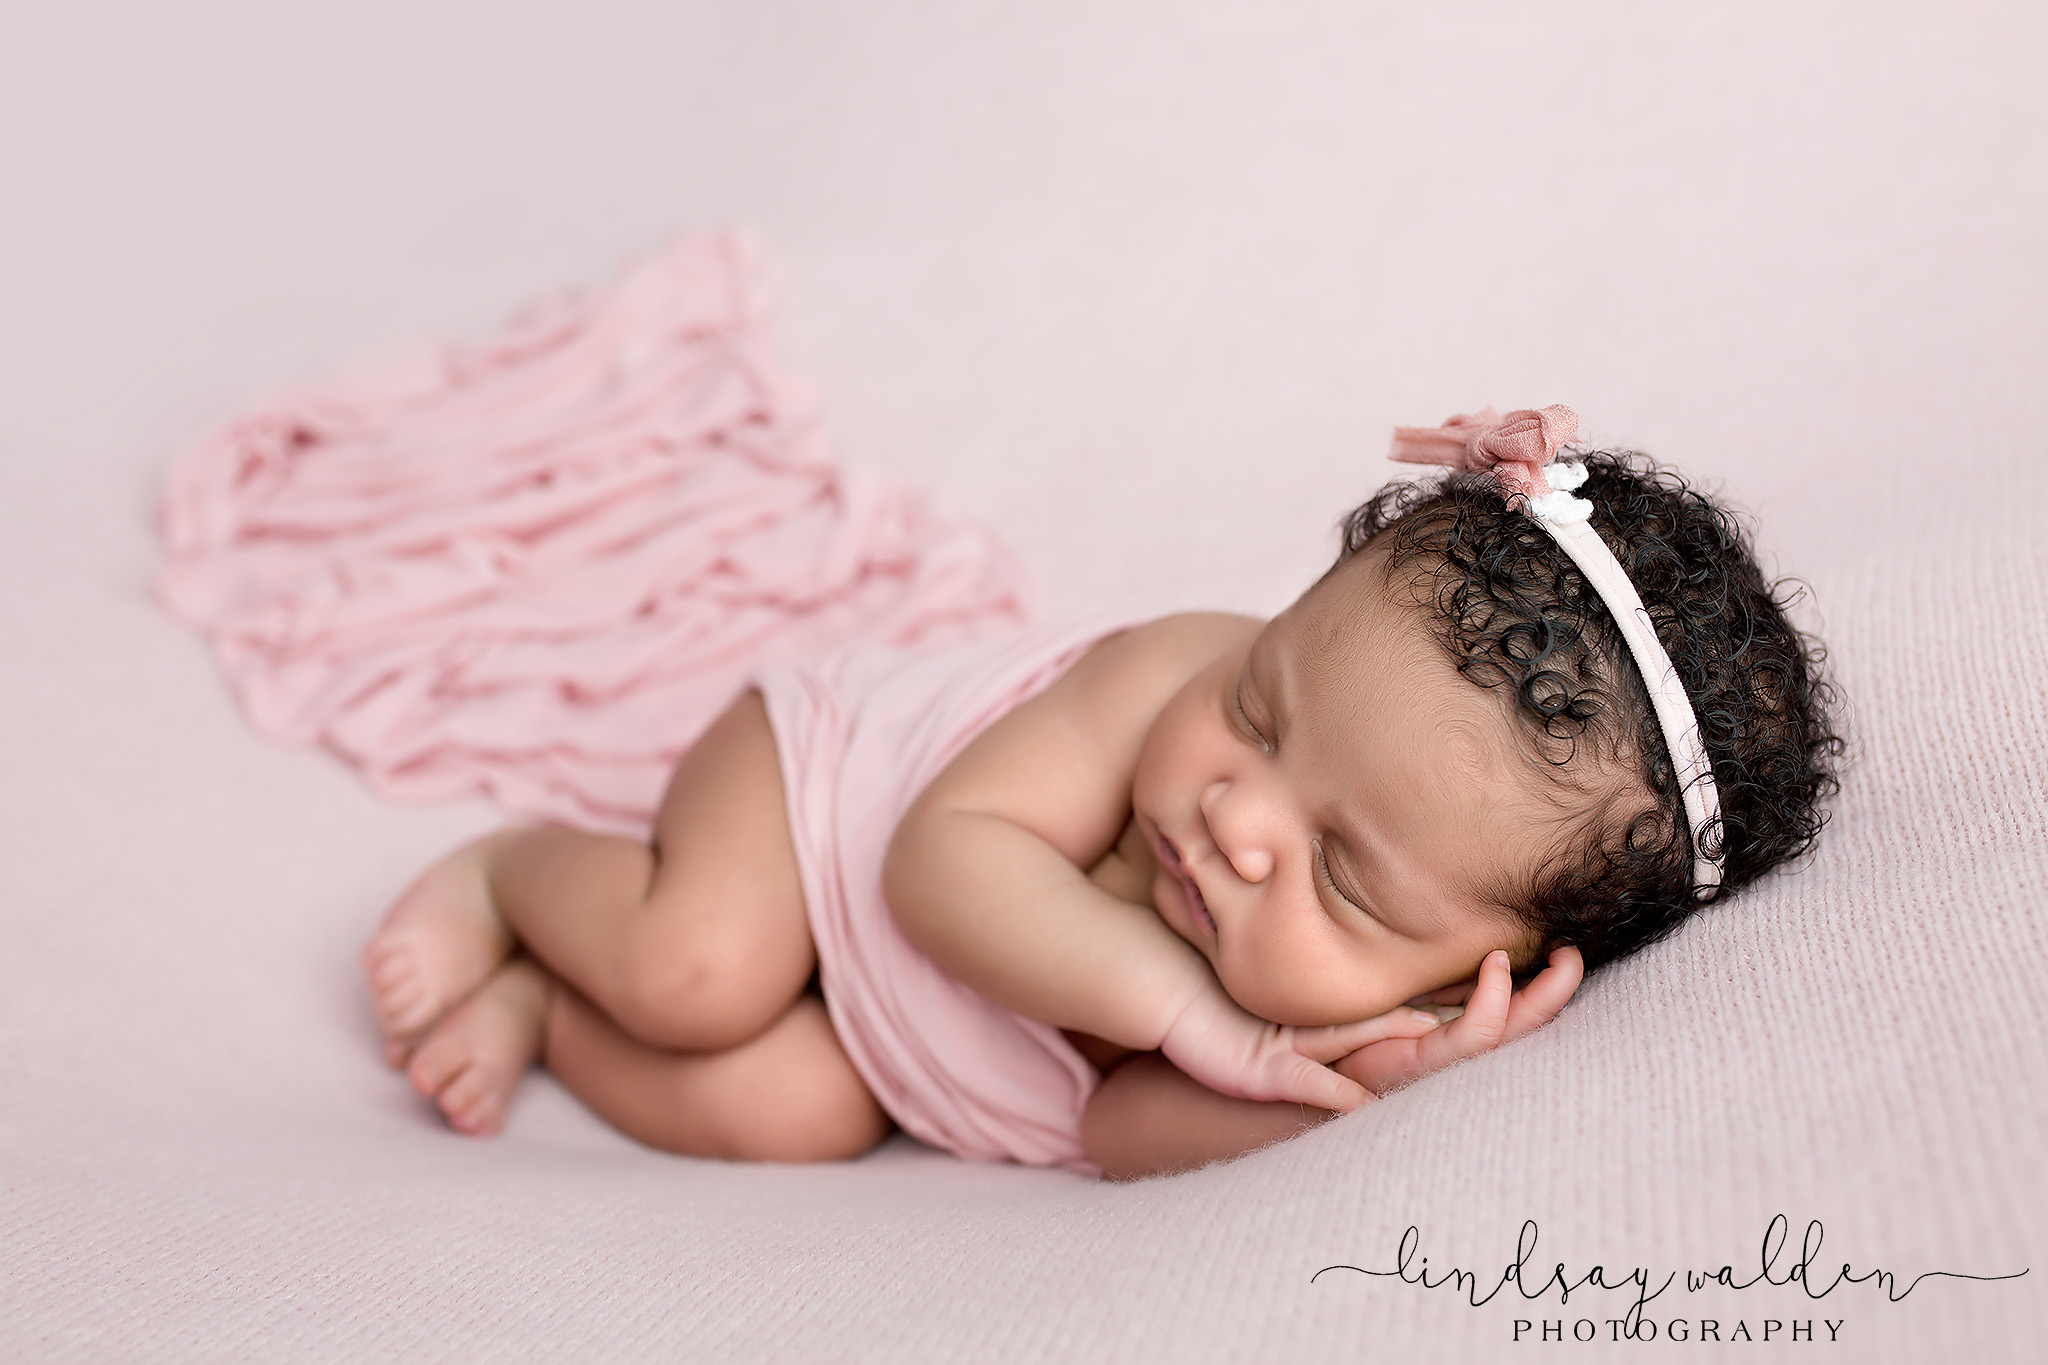 Cute Baby Photos Hemel Hempstead  Osezena — Becki Williams Photography